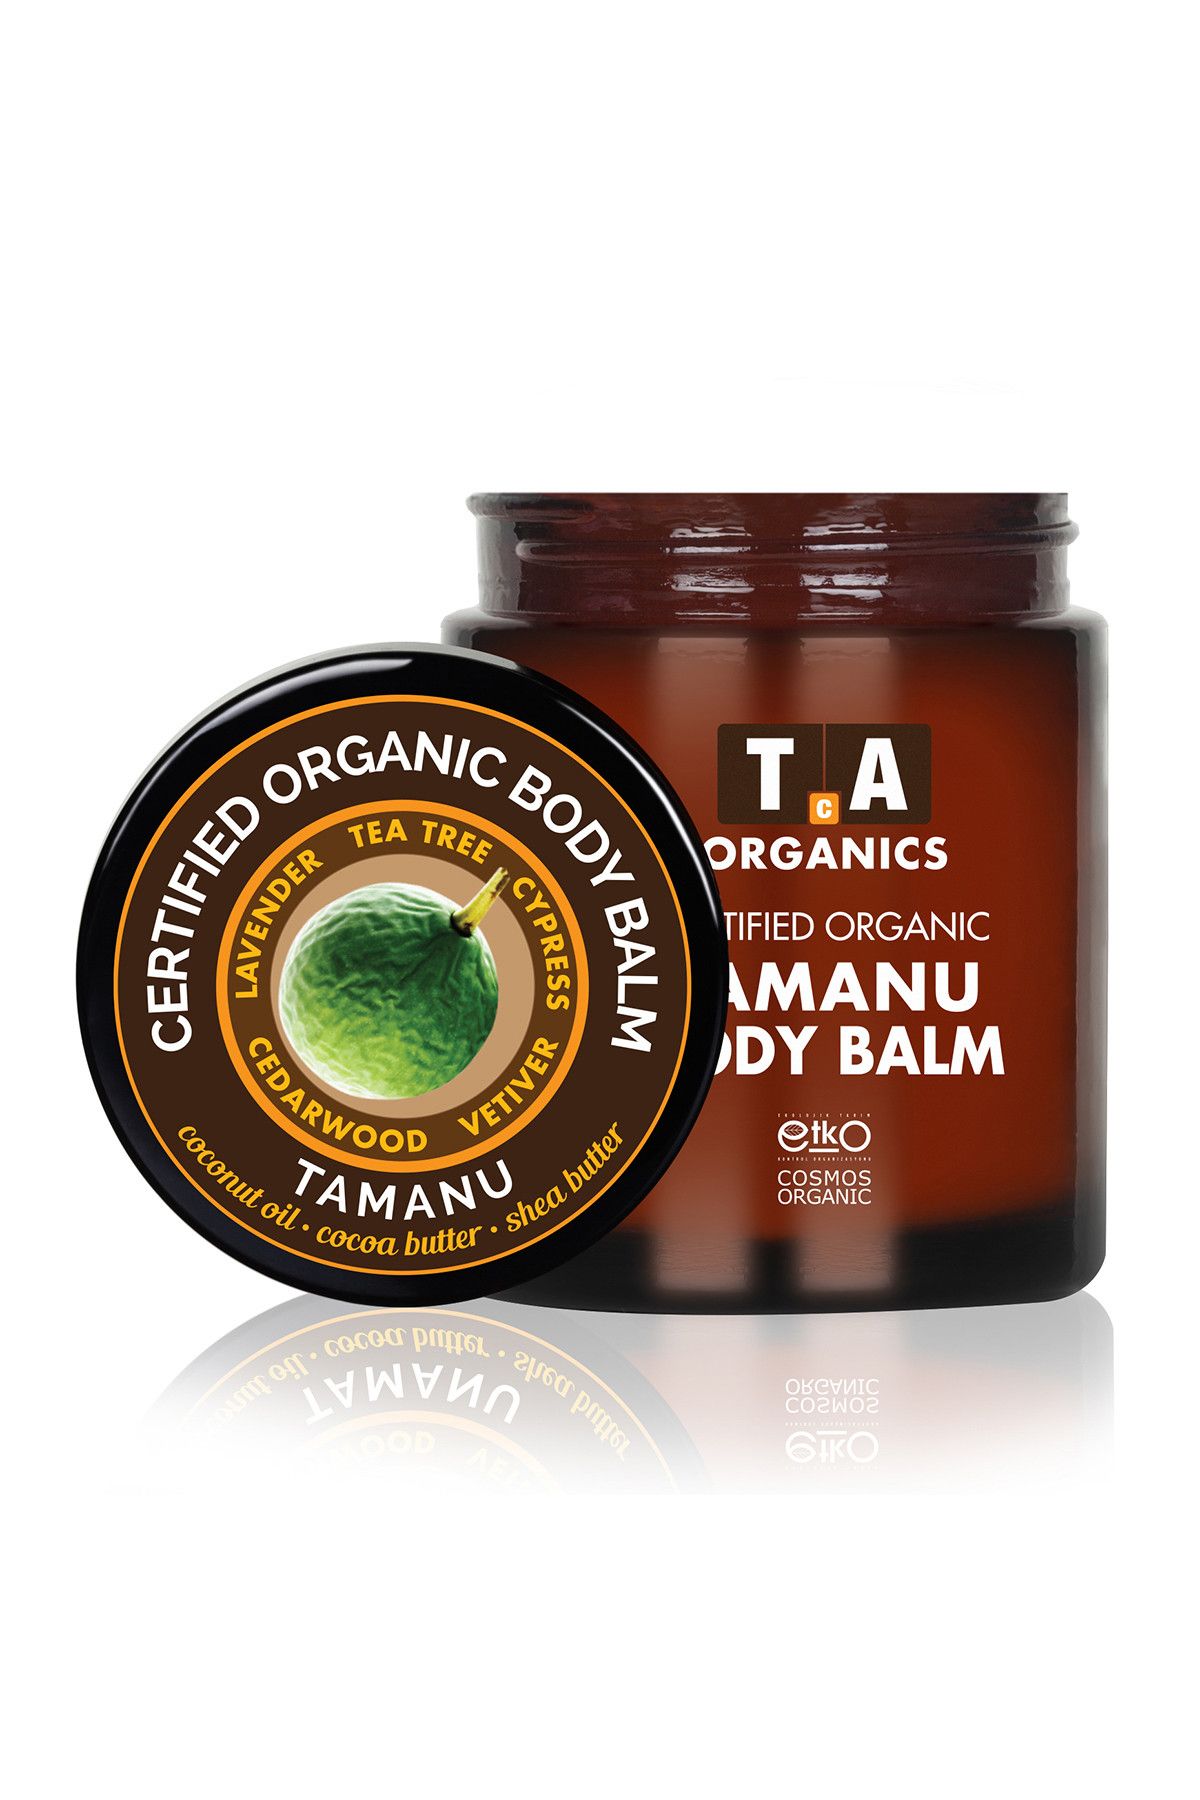 Tca Organics Vücut Balmı - Tamanu Body Balm 100 ml 8680196183019